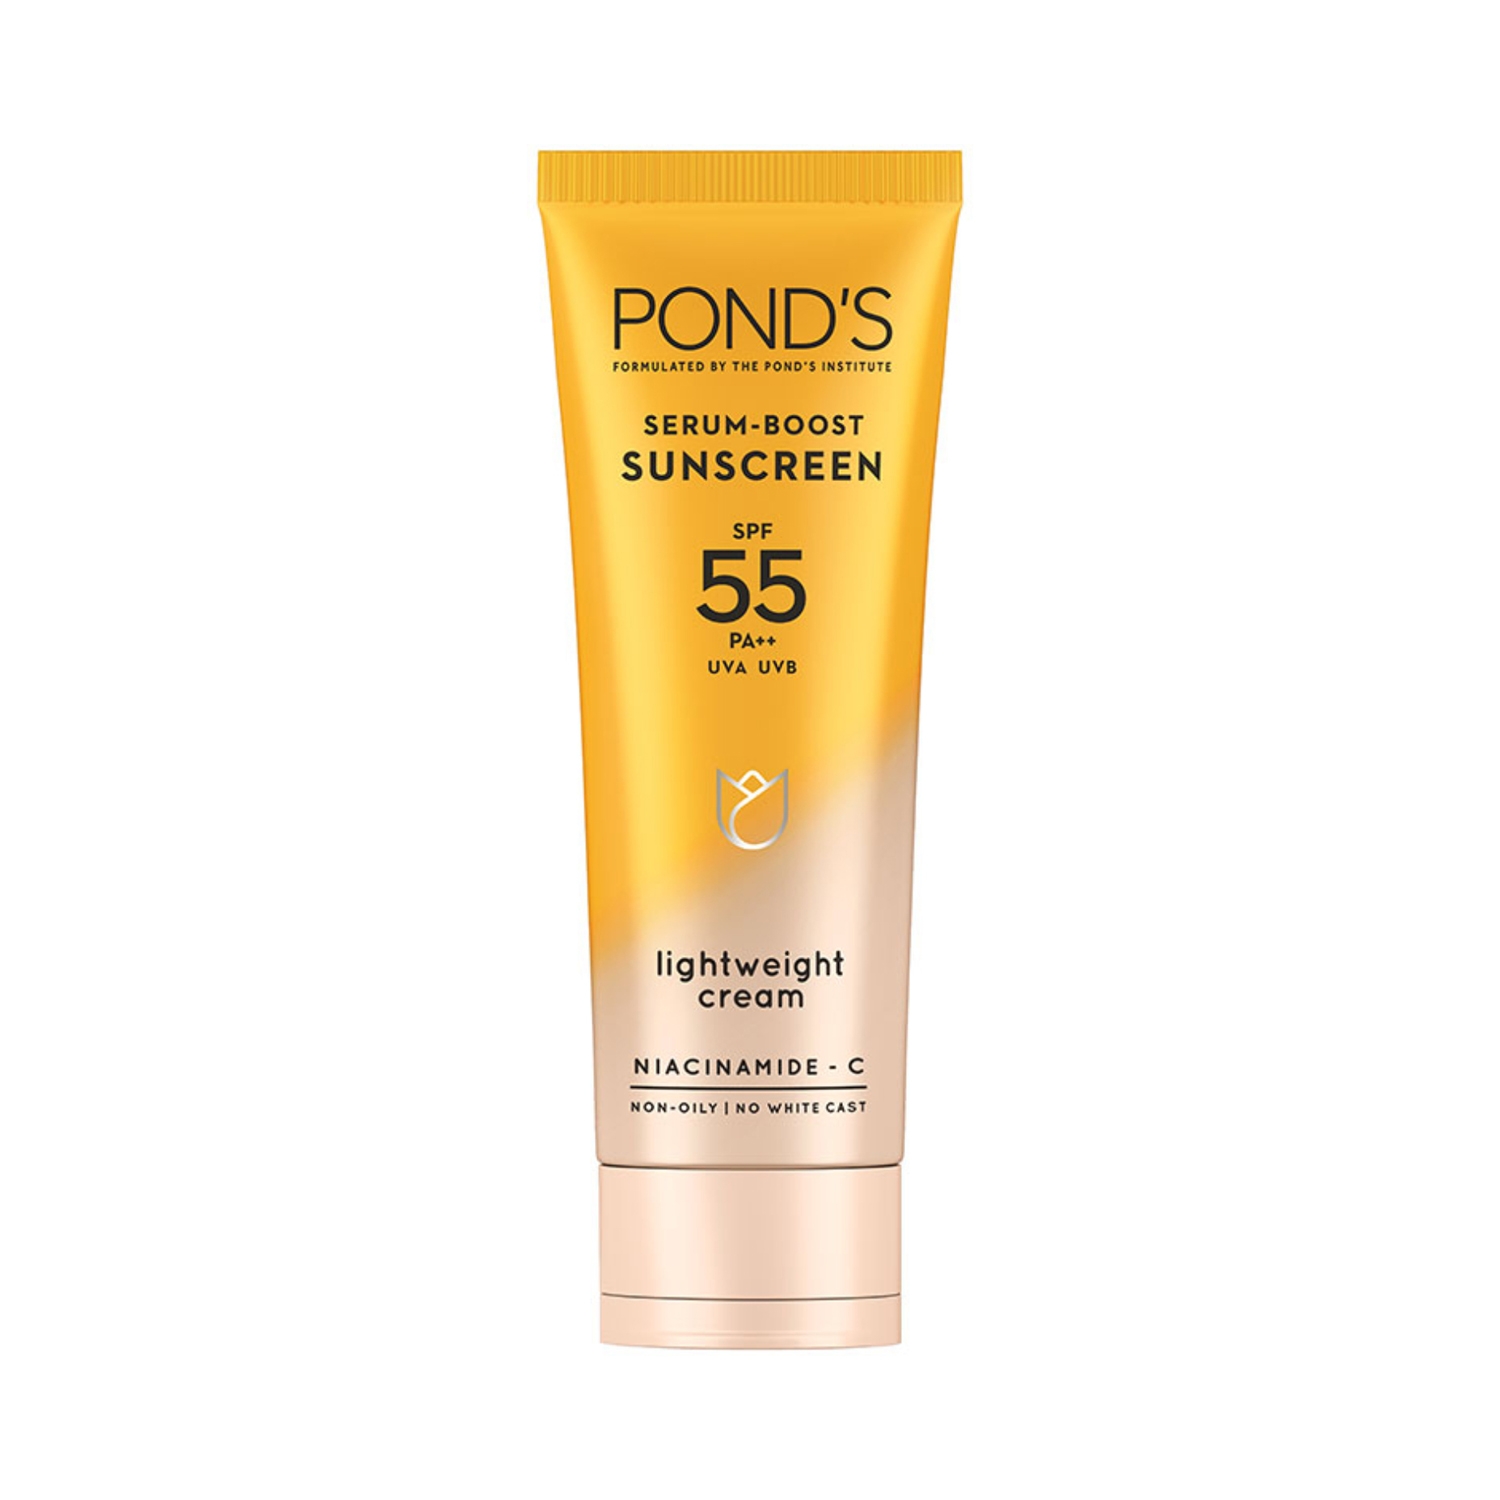 Pond's Serum Boost Sunscreen Cream SPF 55 (100g)